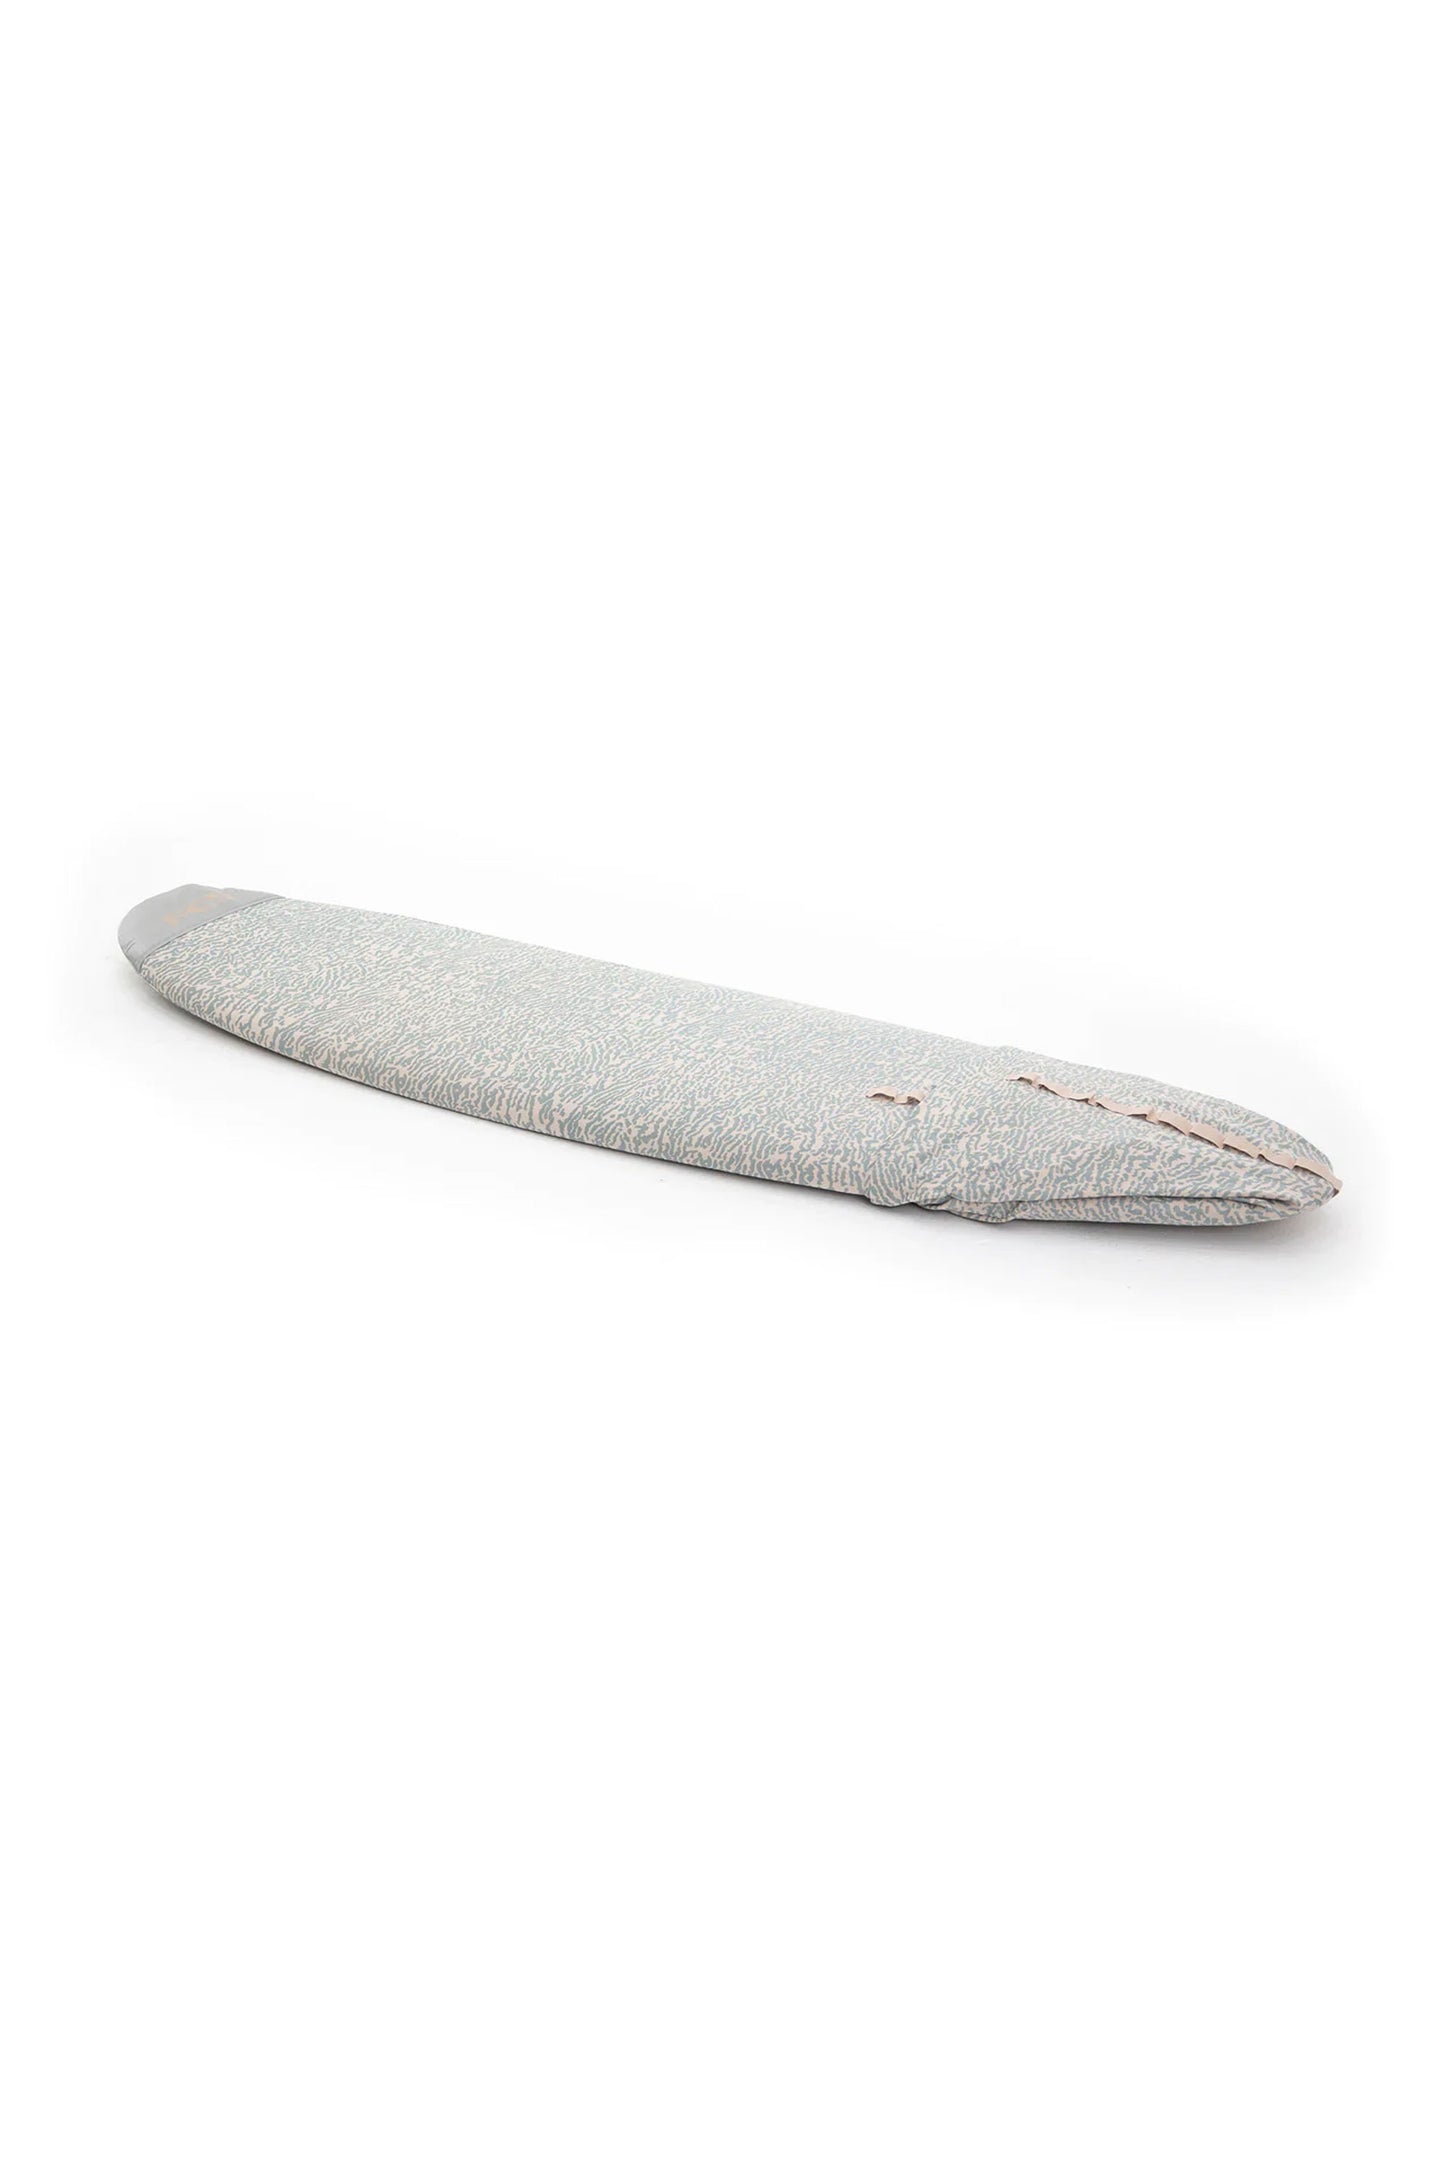 Pukas-Surf-Shop-fcs-adjustable-stretch-longboard-cover-grey